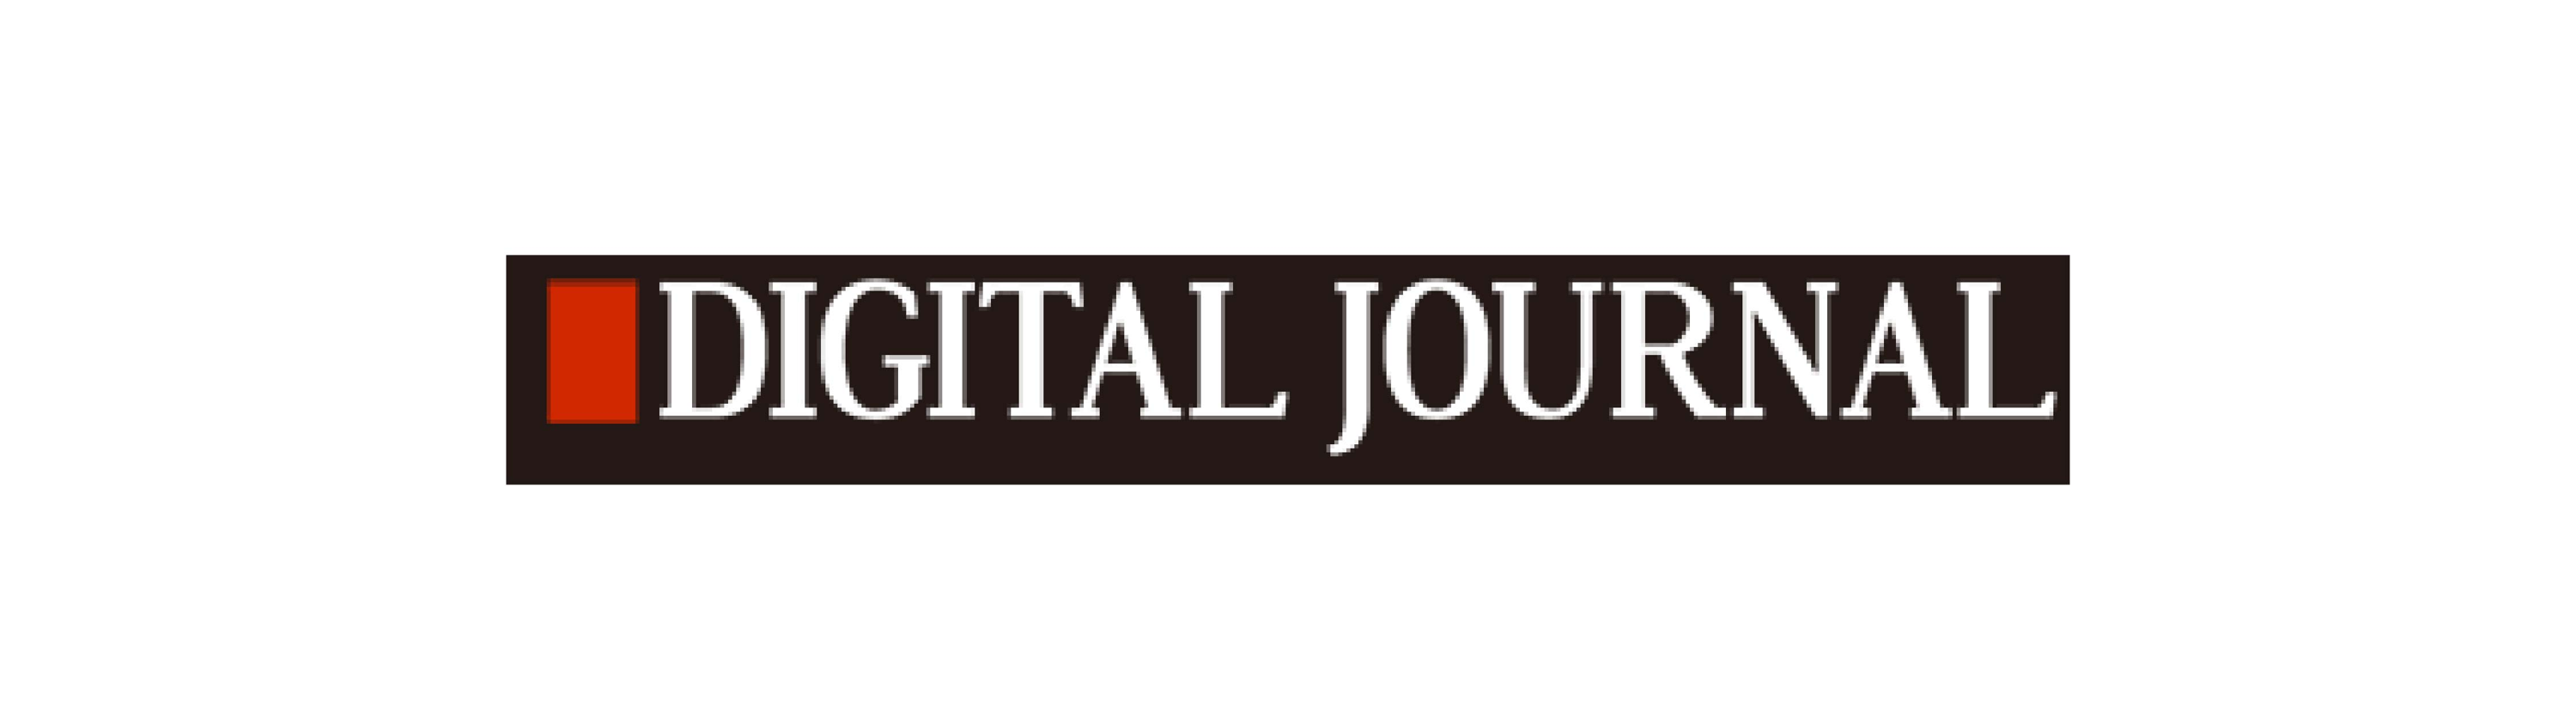 digital journal article